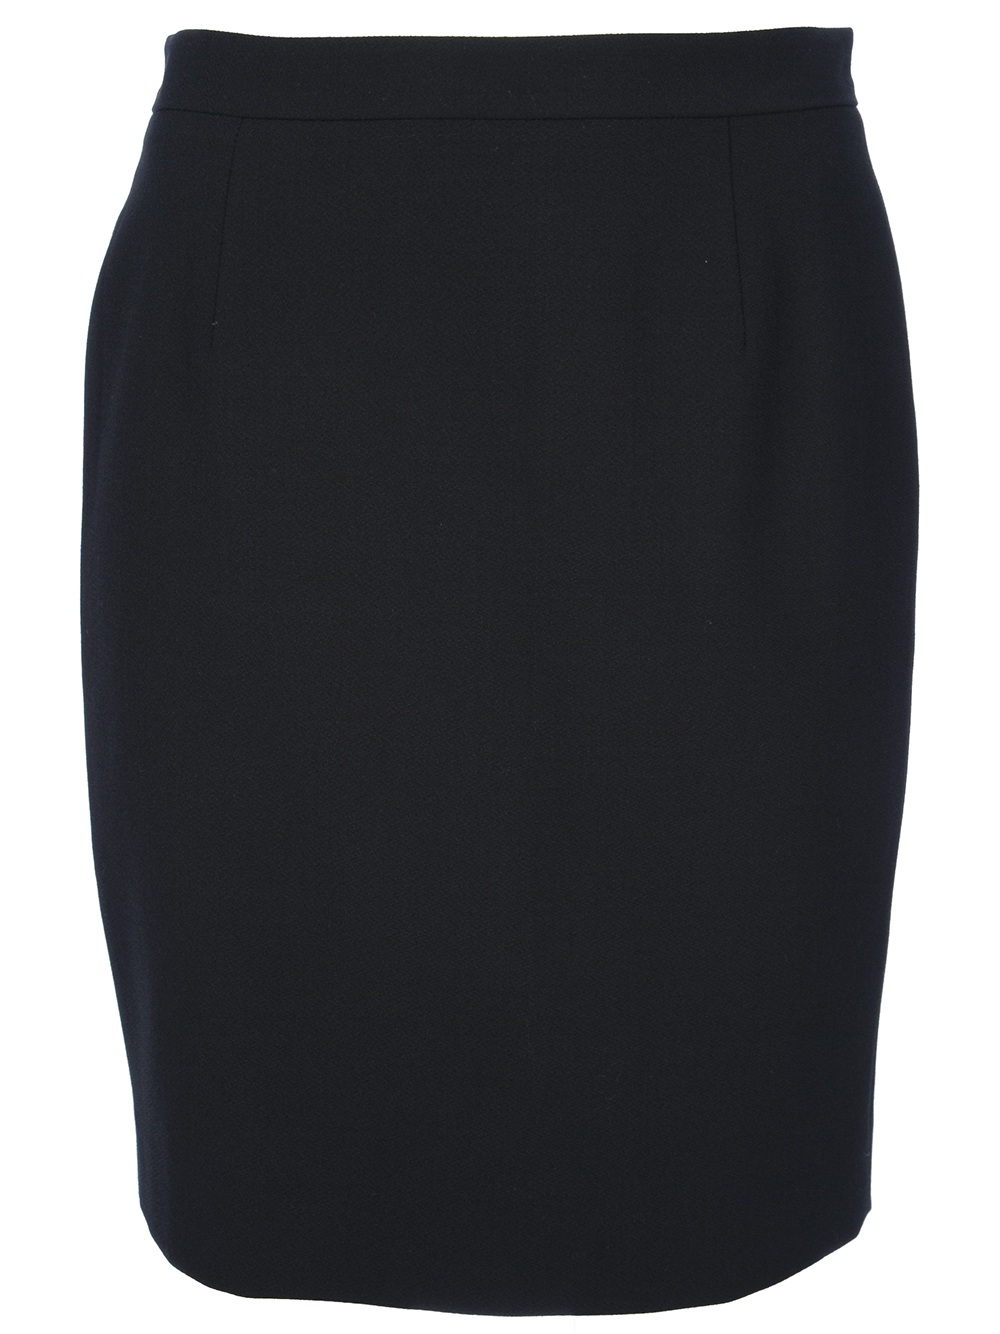 DSquared² Short Pencil Skirt in Black | Lyst